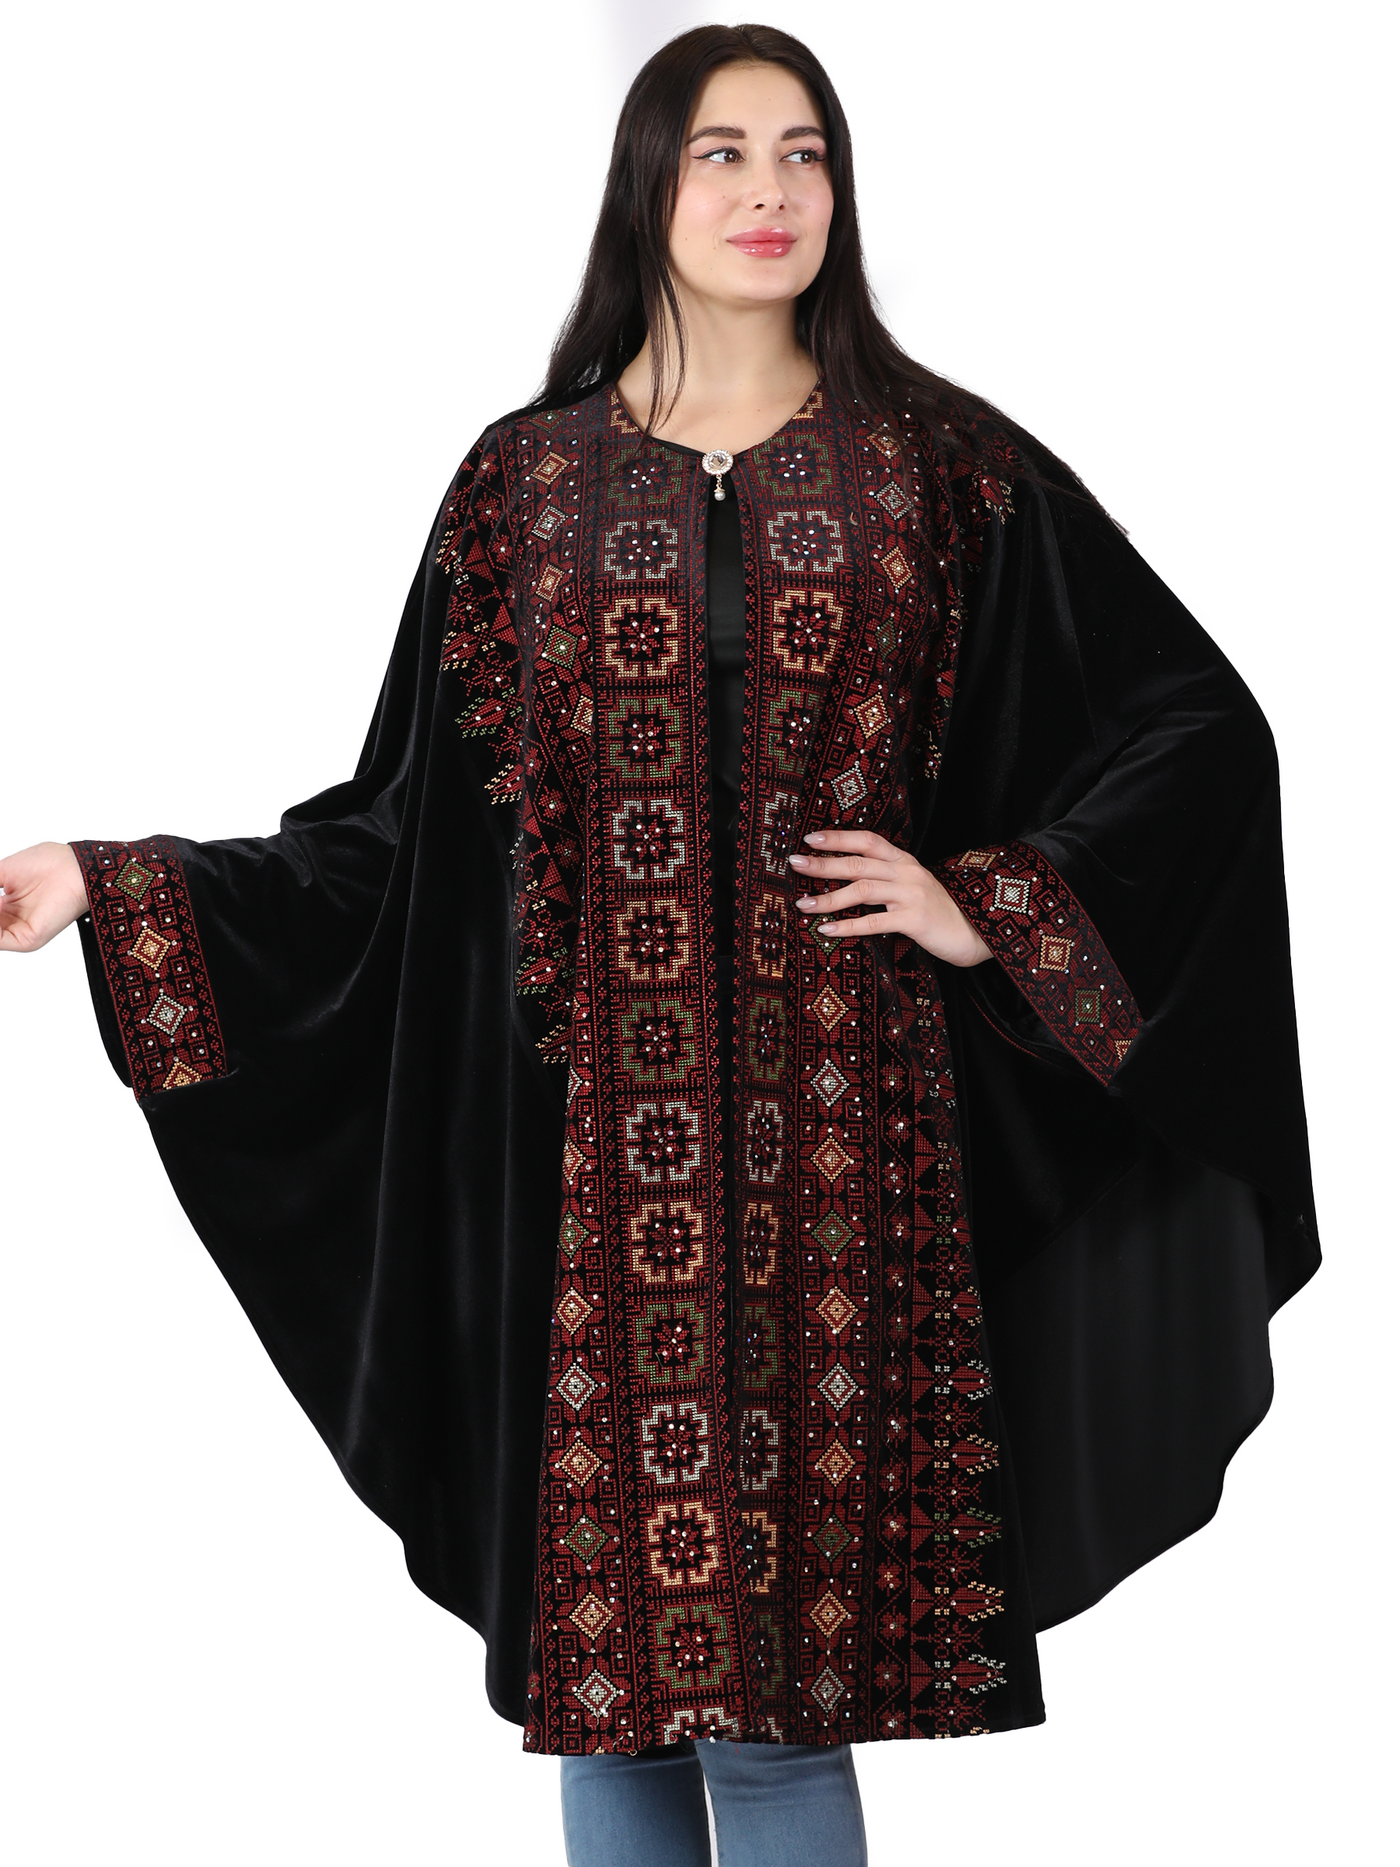 Embroidered Jacket/Shawl - (Free Size) High Quality Embroidered Palestinian style shawl/Jacket